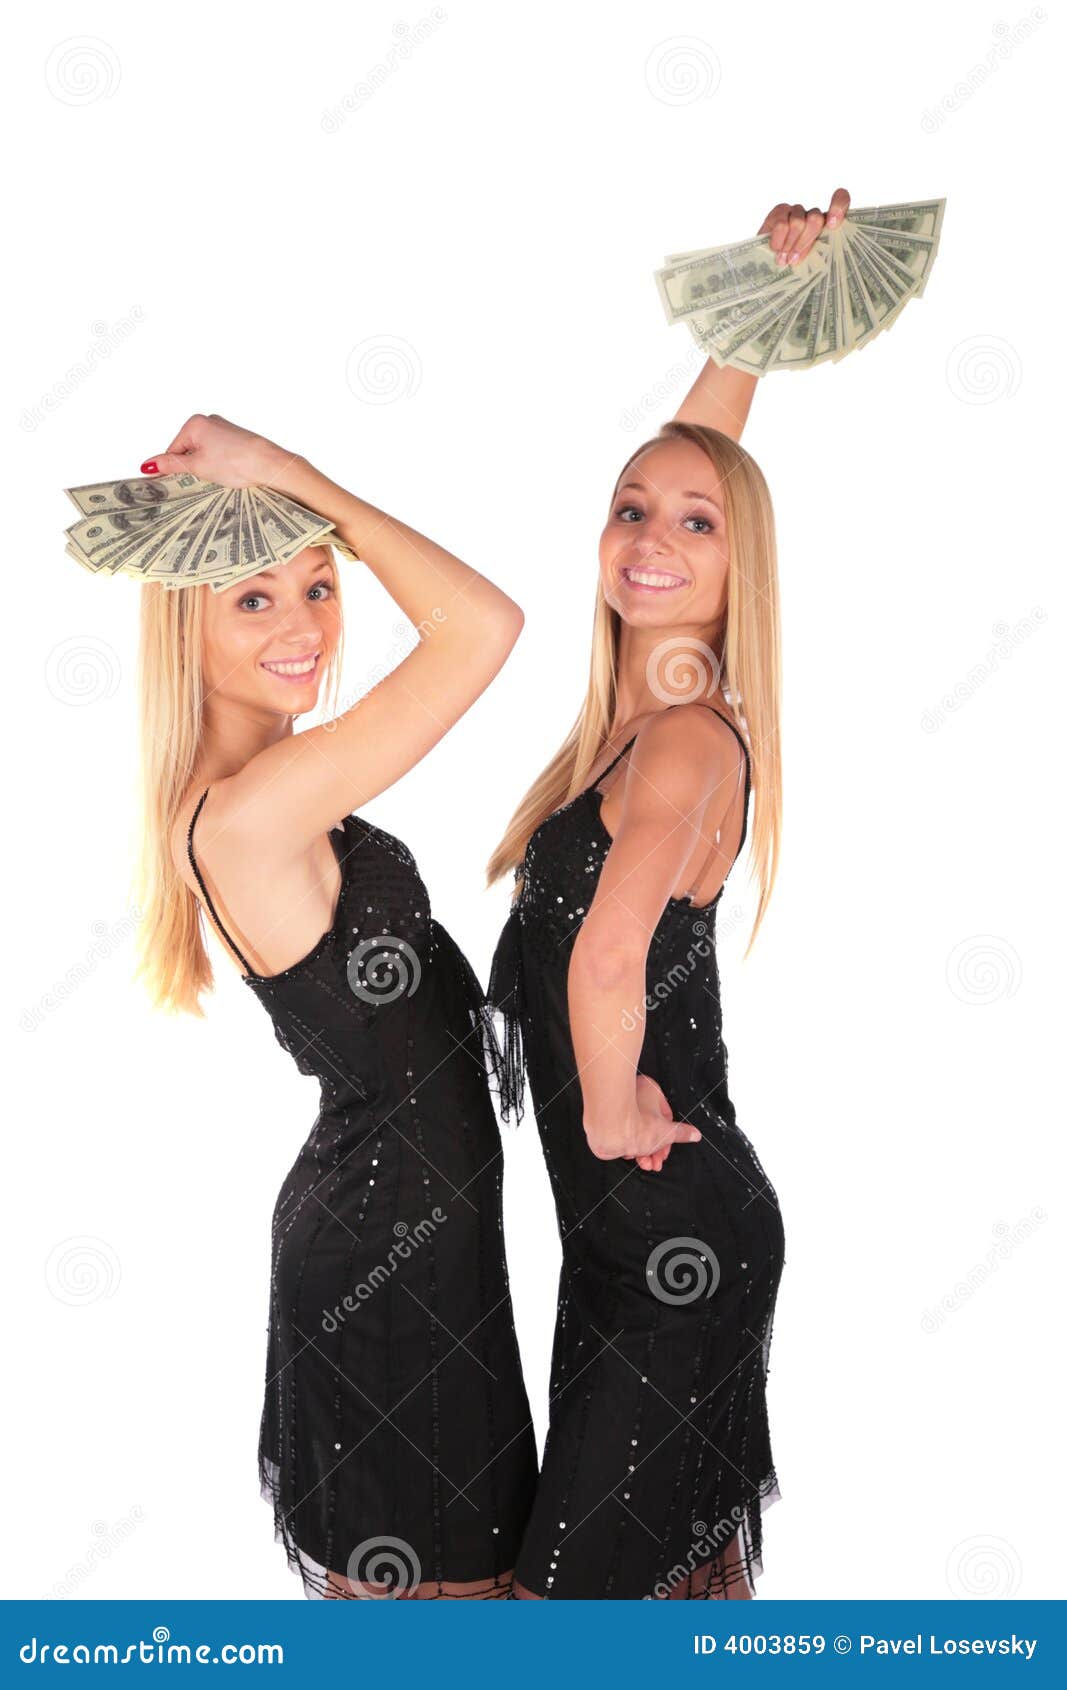 twin girls sway dollars